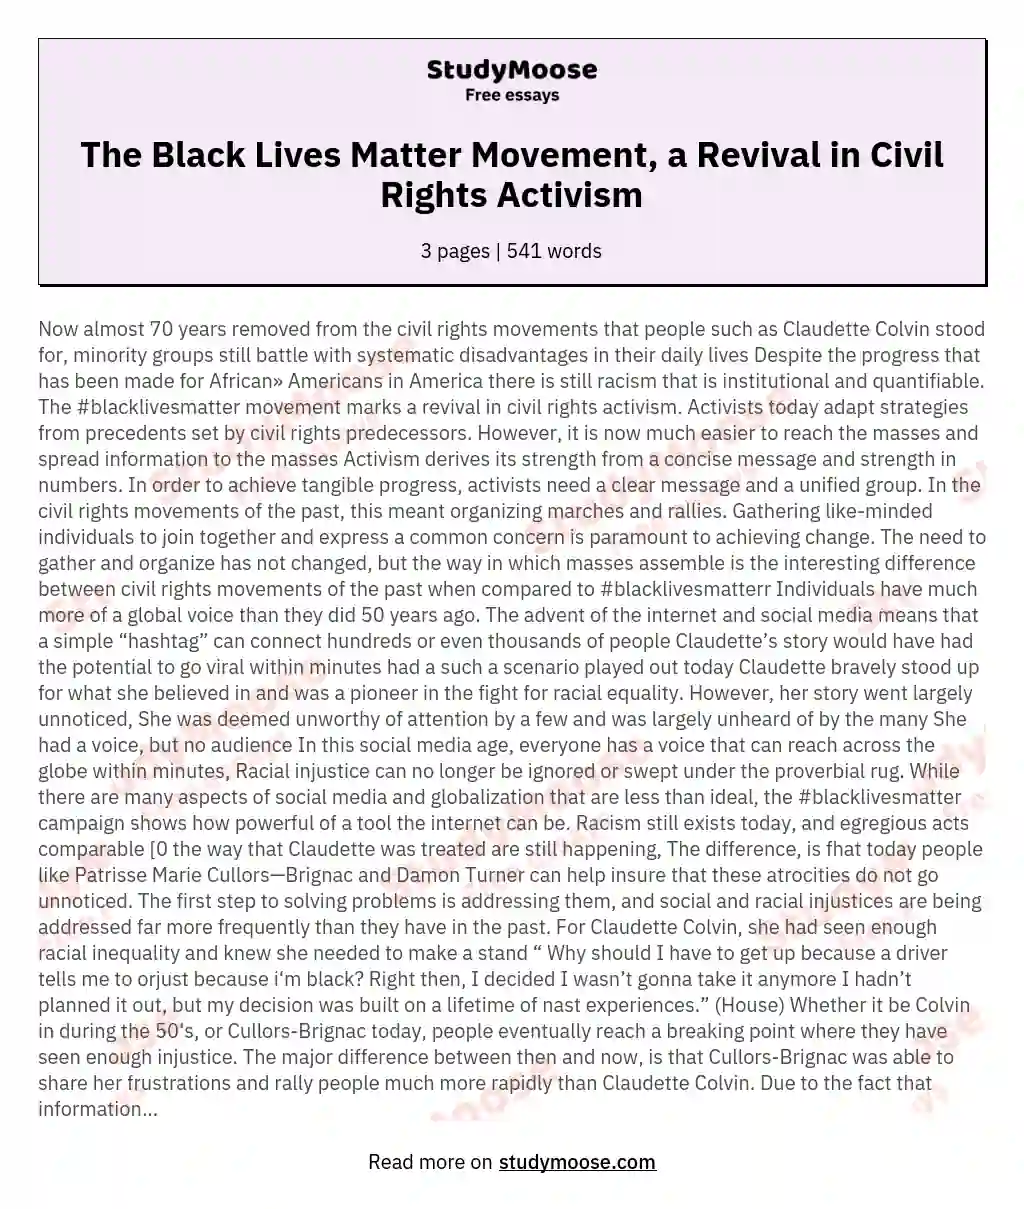 The Black Lives Matter Movement, a Revival in Civil Rights Activism essay